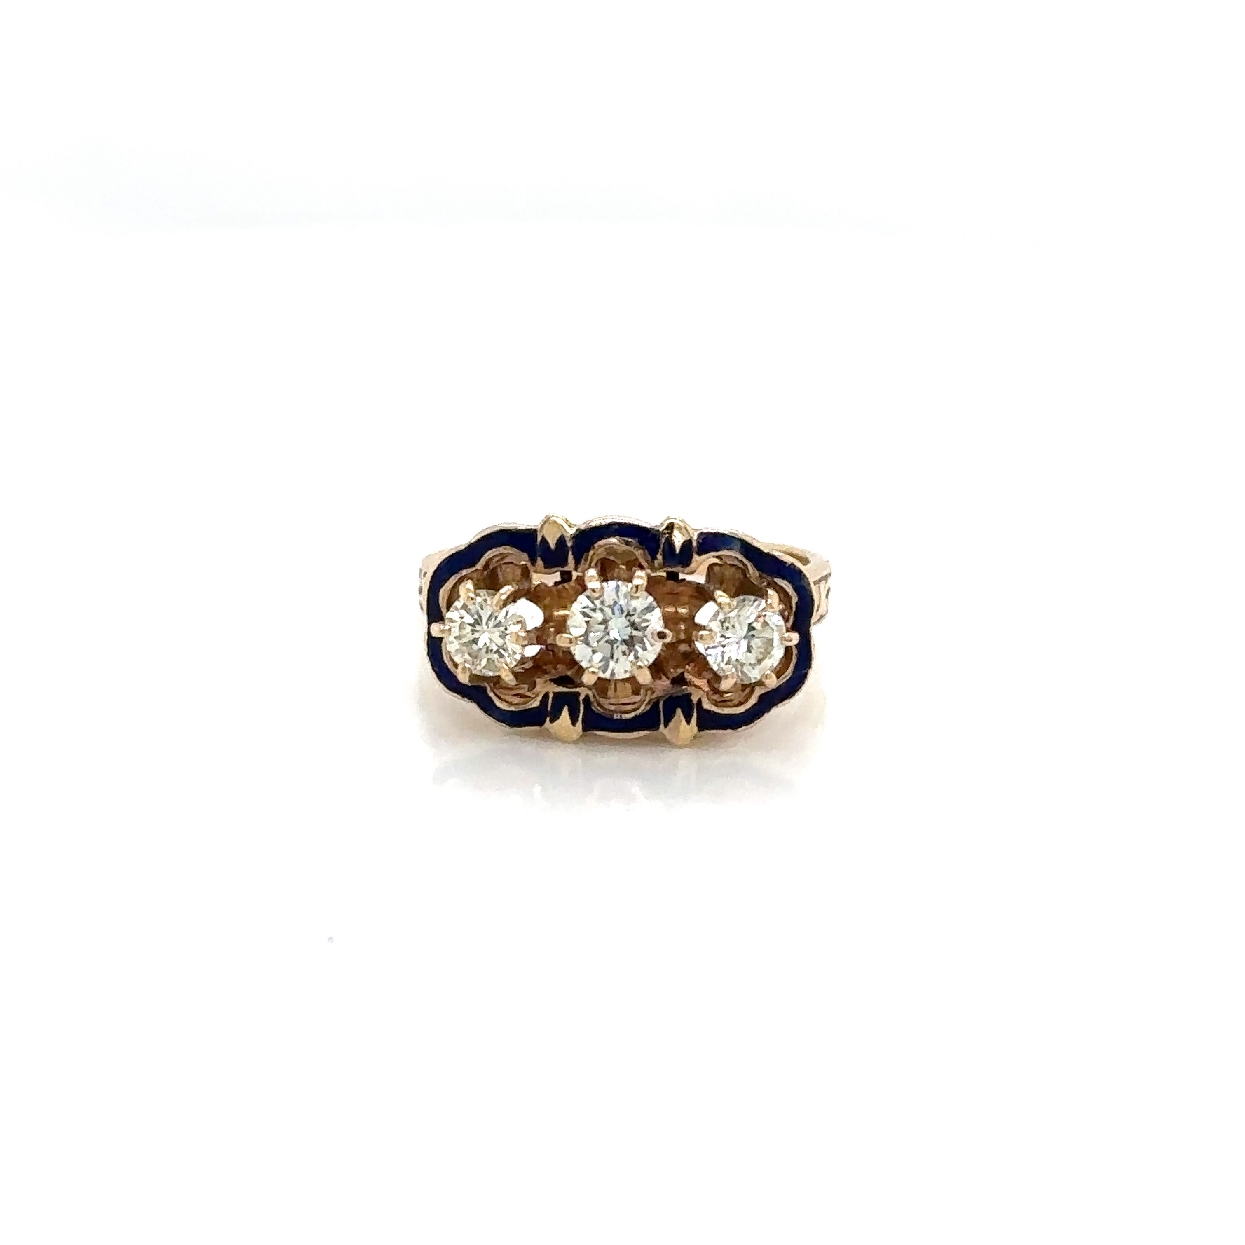 Antique 14K Yellow Gold Diamond Ring with Blue Enamel 

Size 6.75